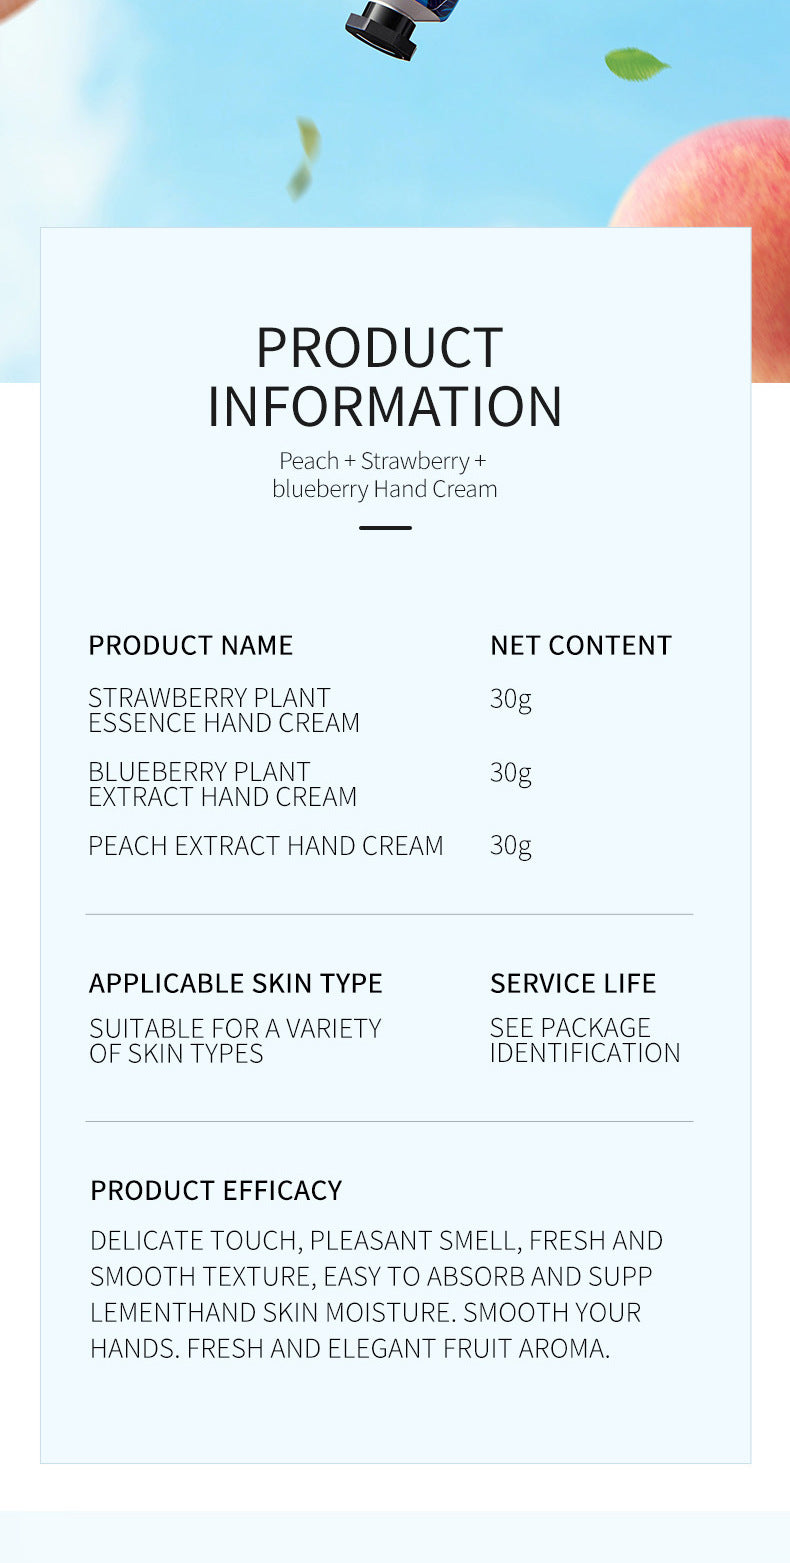 Wholesale Moisturizing and Tender Blueberry Hand Cream, Private Label Hand Cream Customization 432